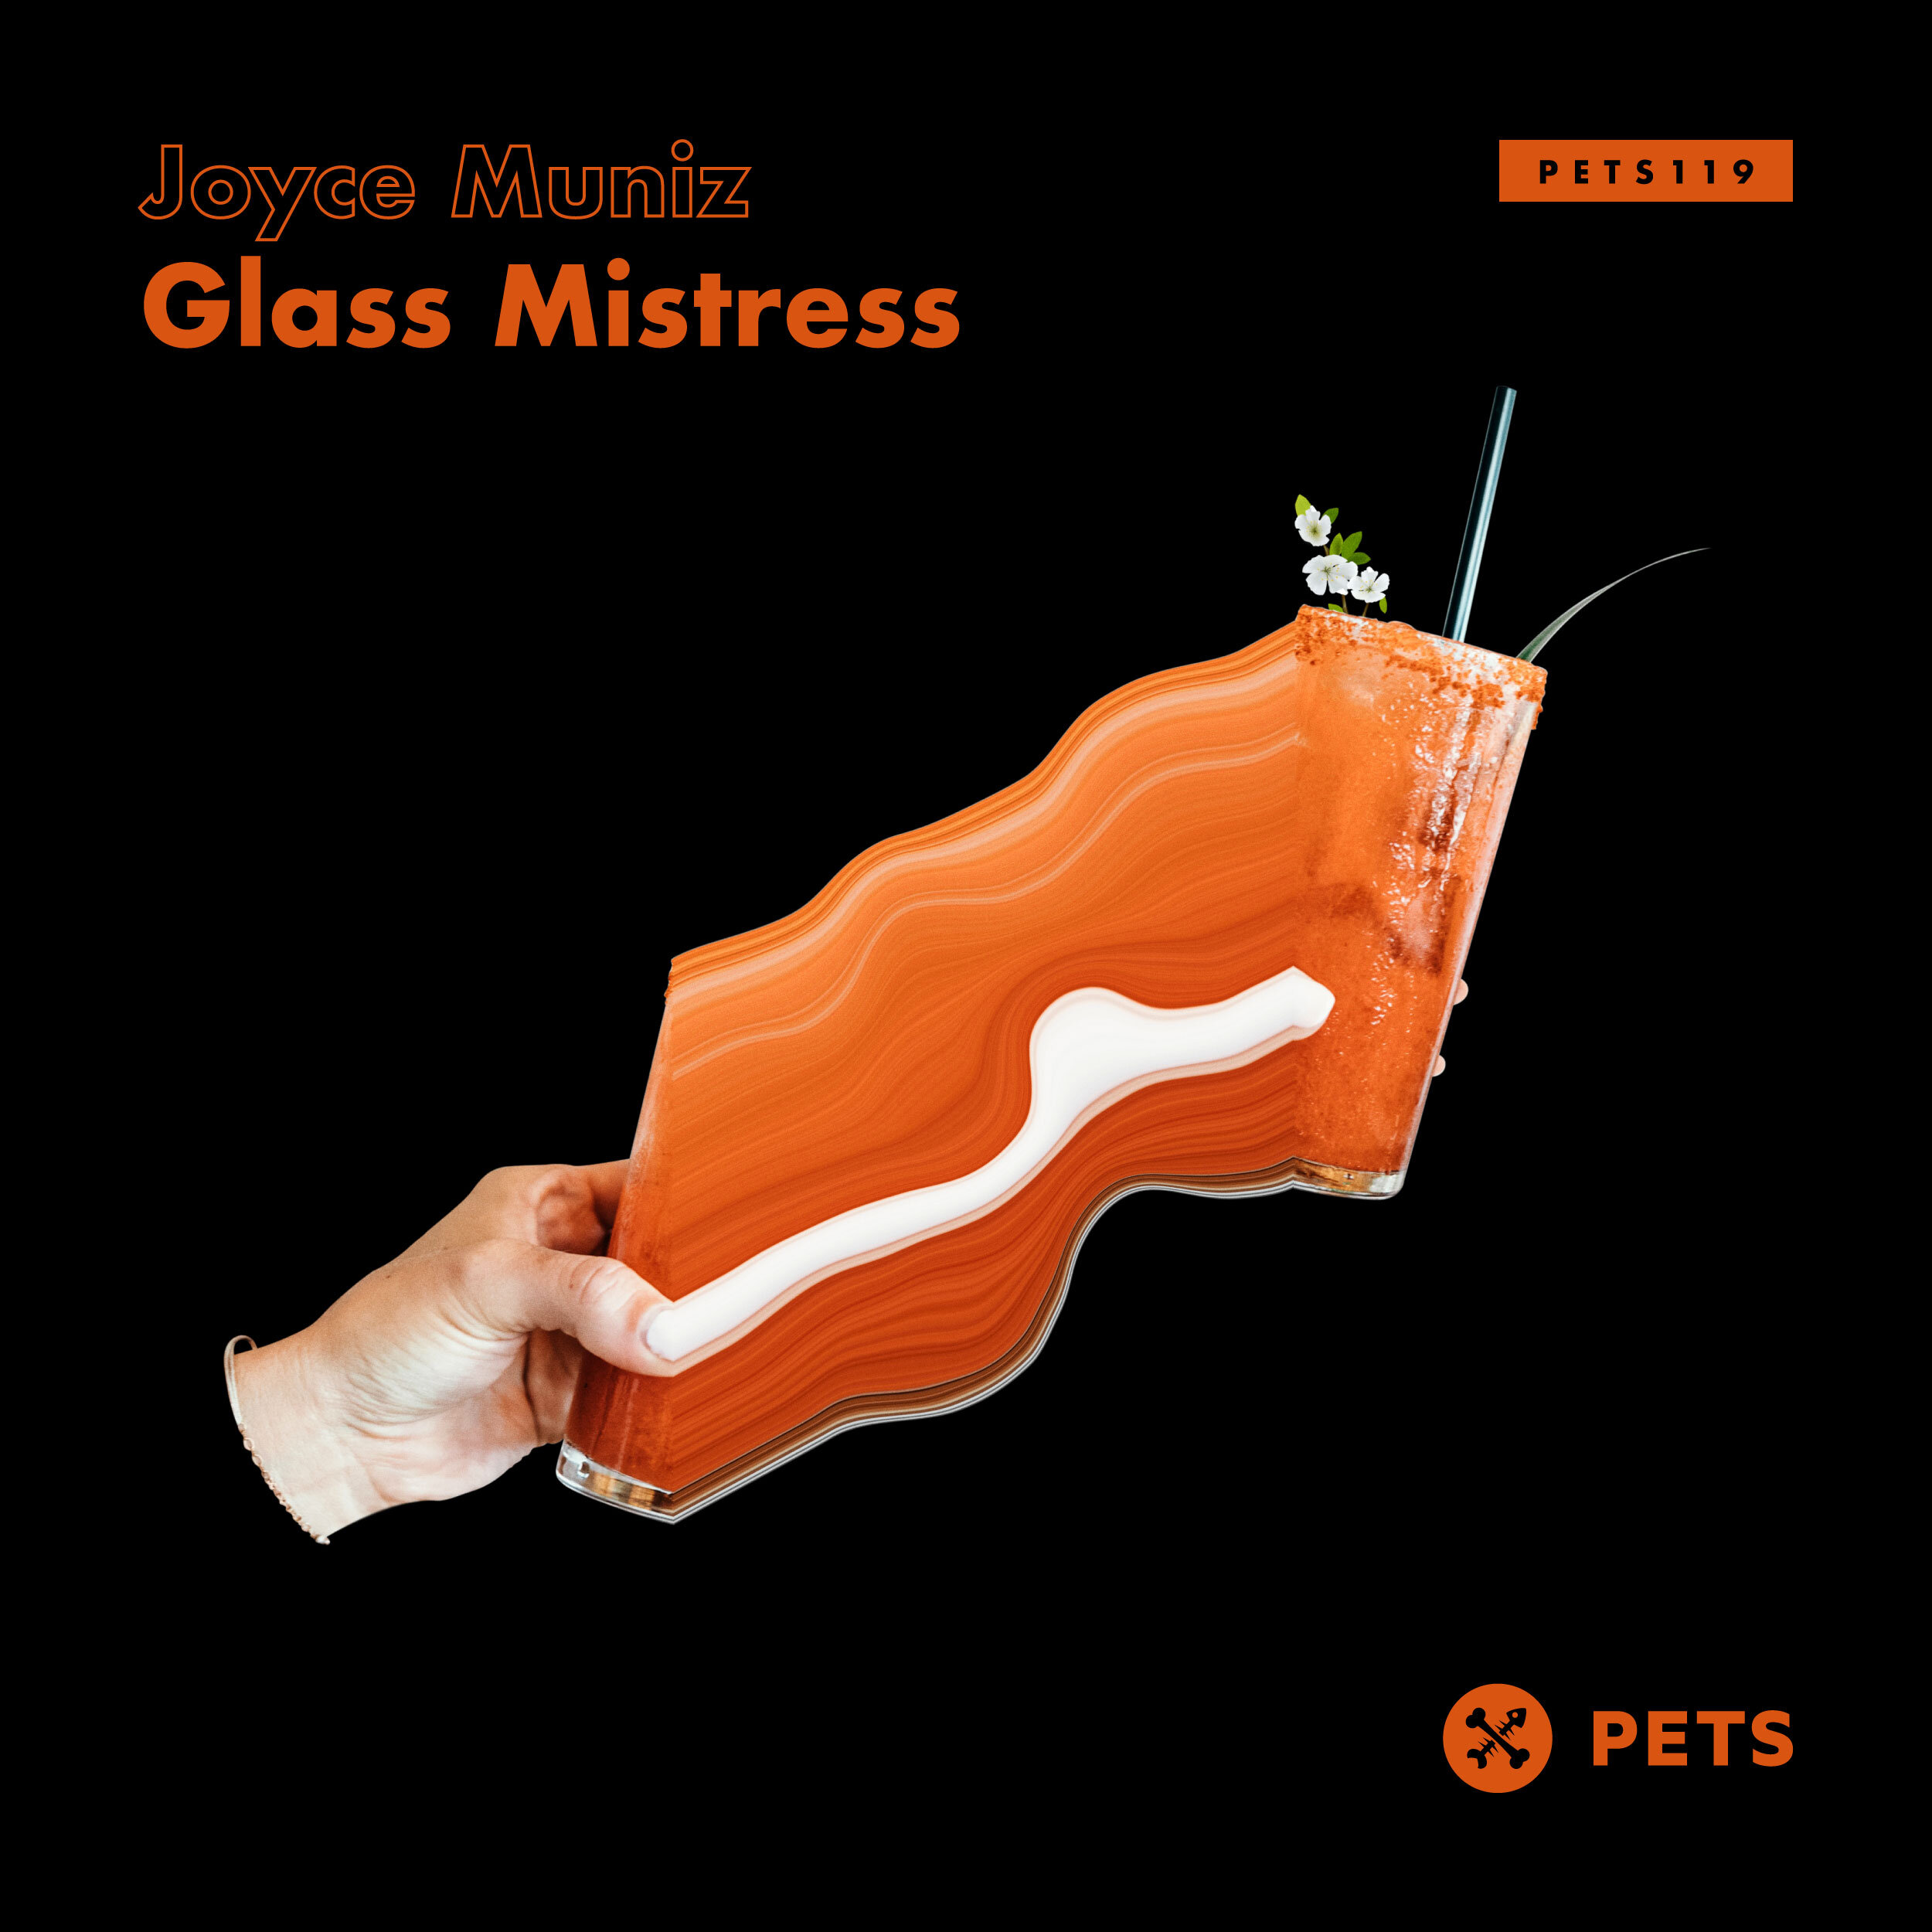 PETS119 Joyce Muniz - Glass Mistress